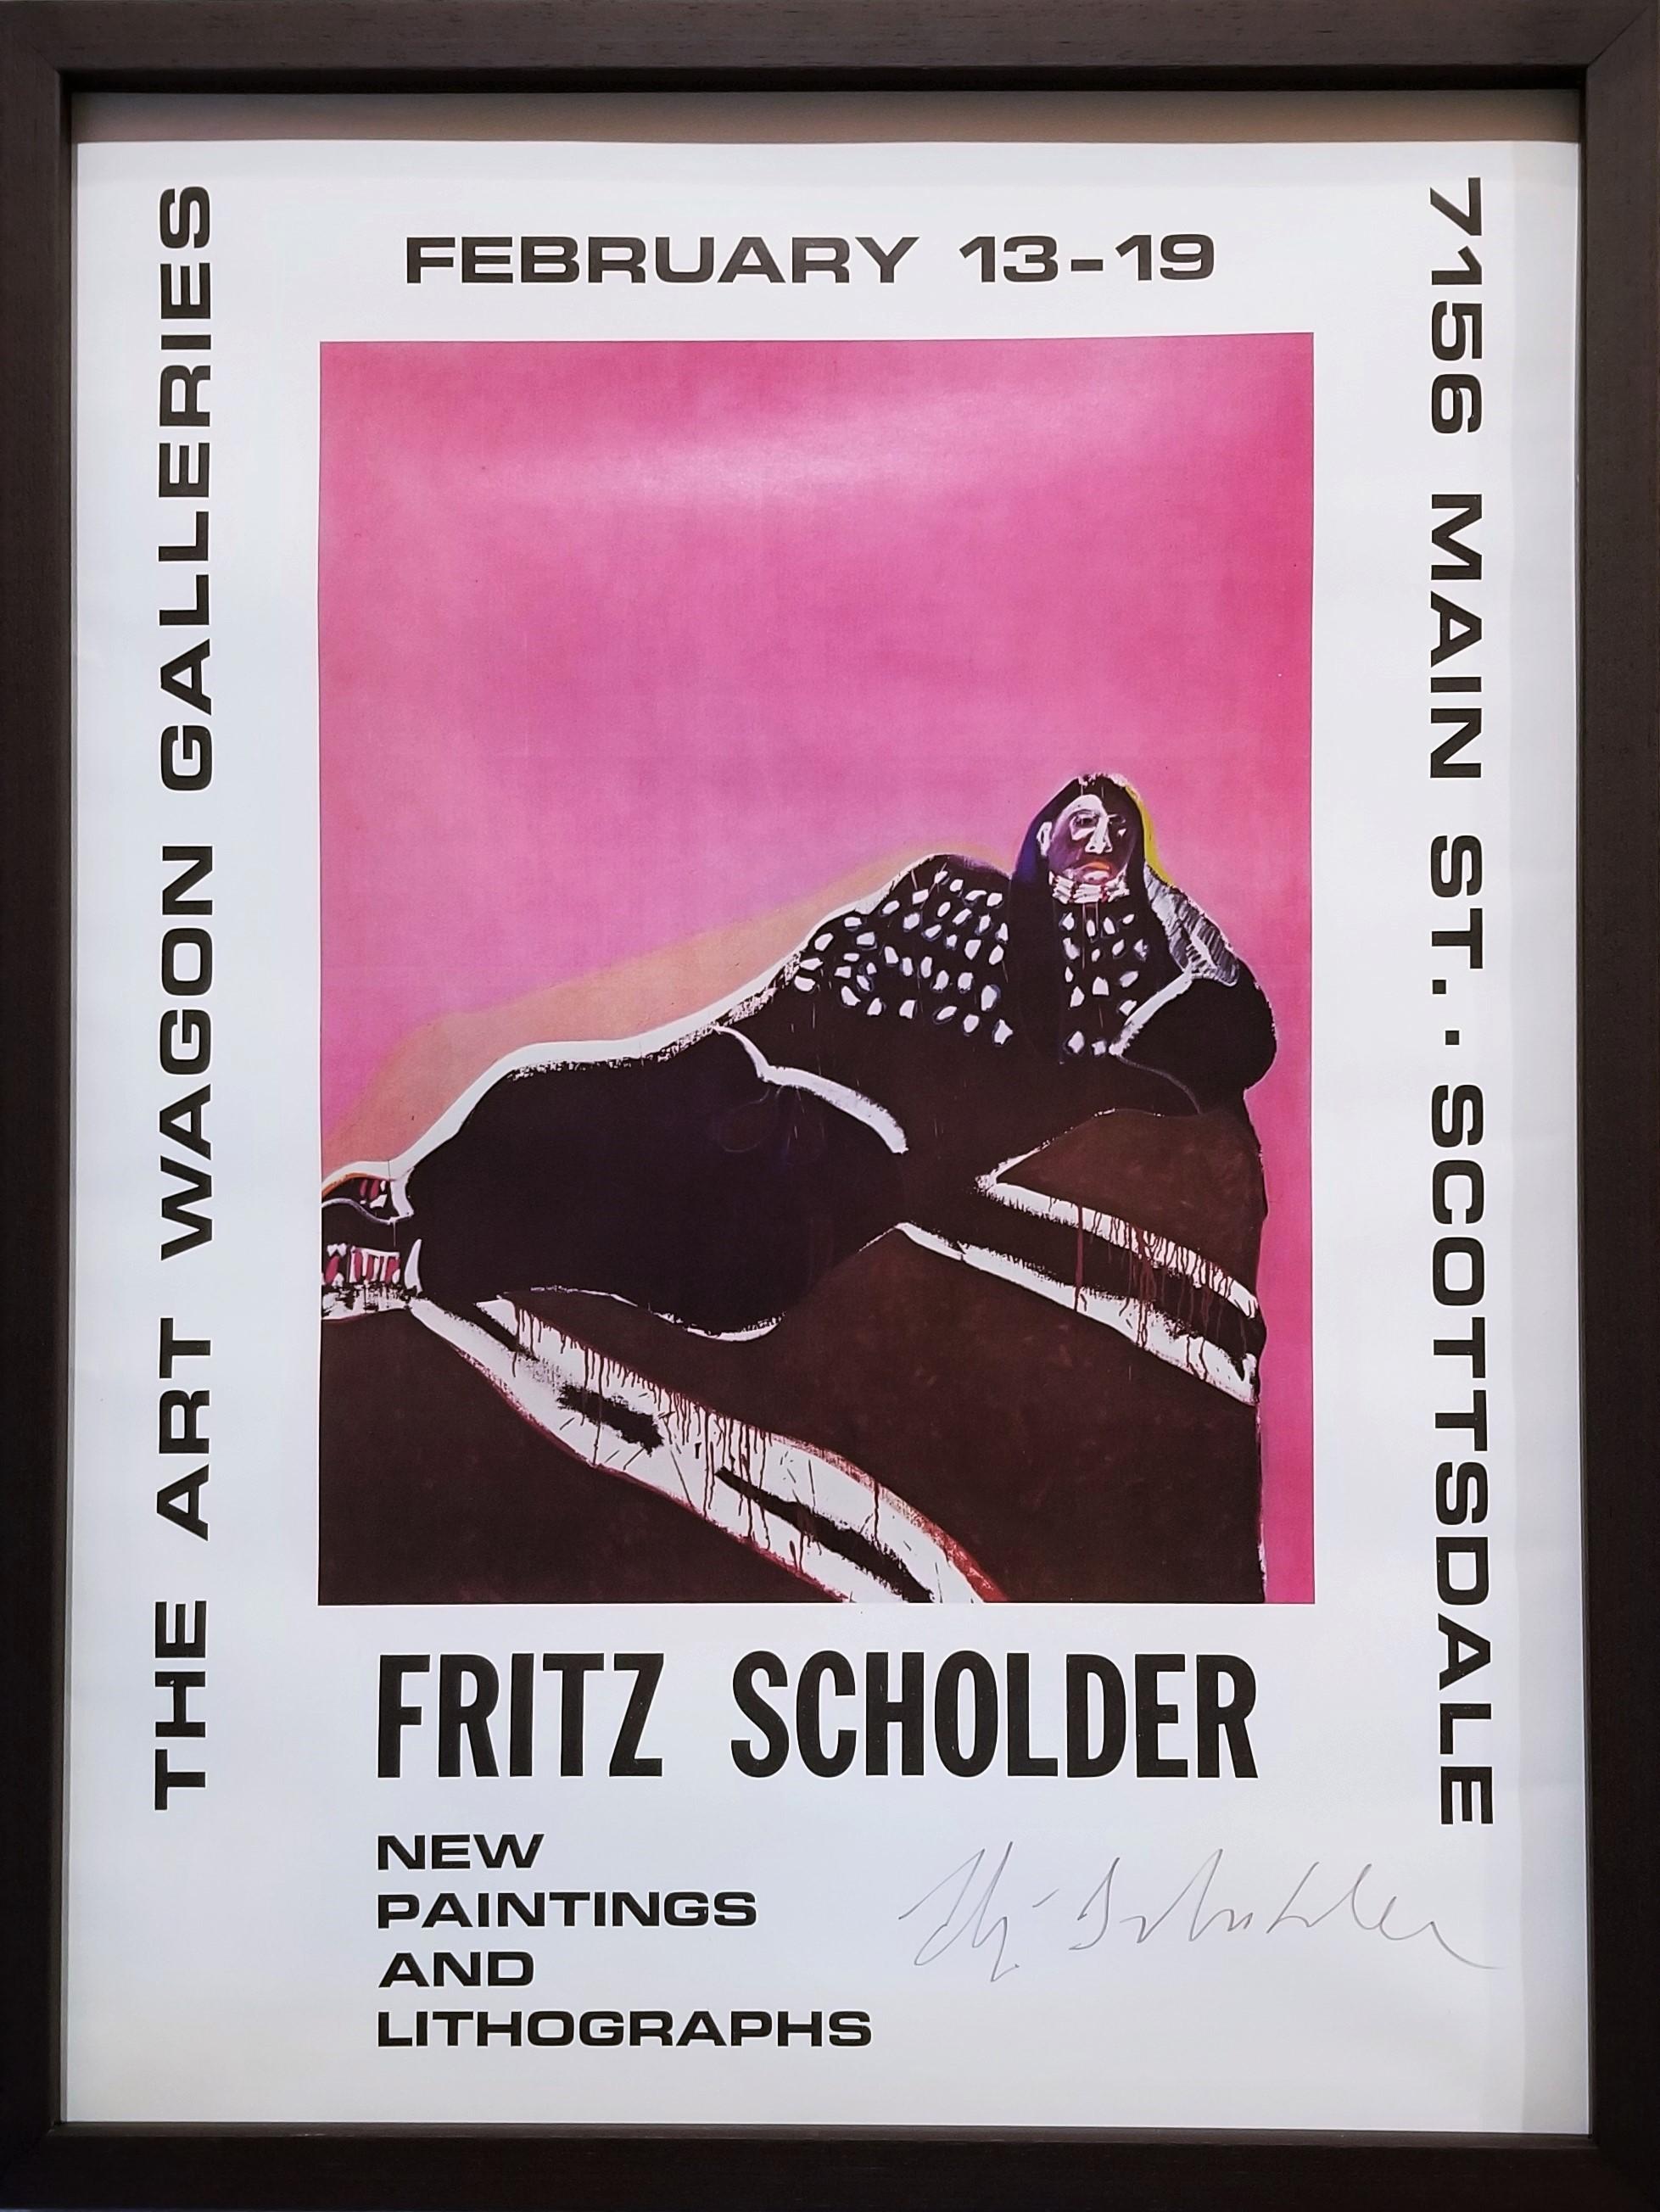 fritz scholder poster